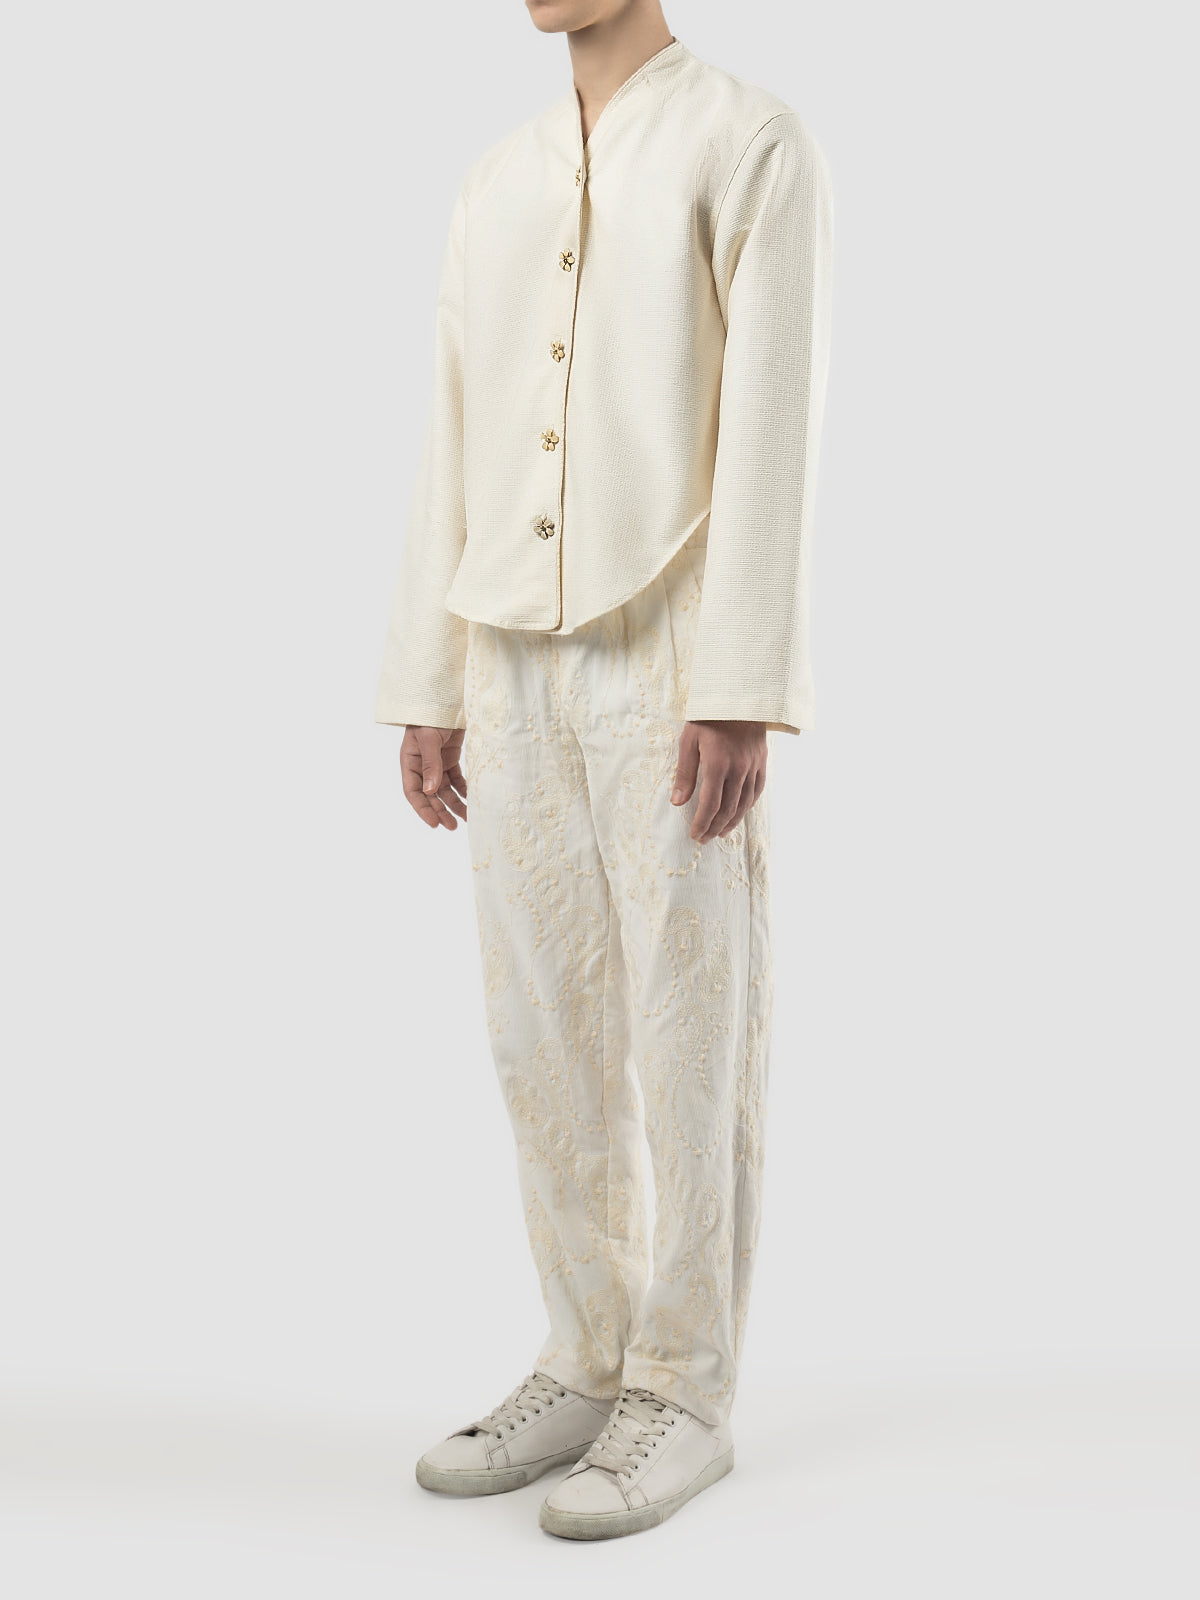 Kimono white long-sleeved embroidered shirt